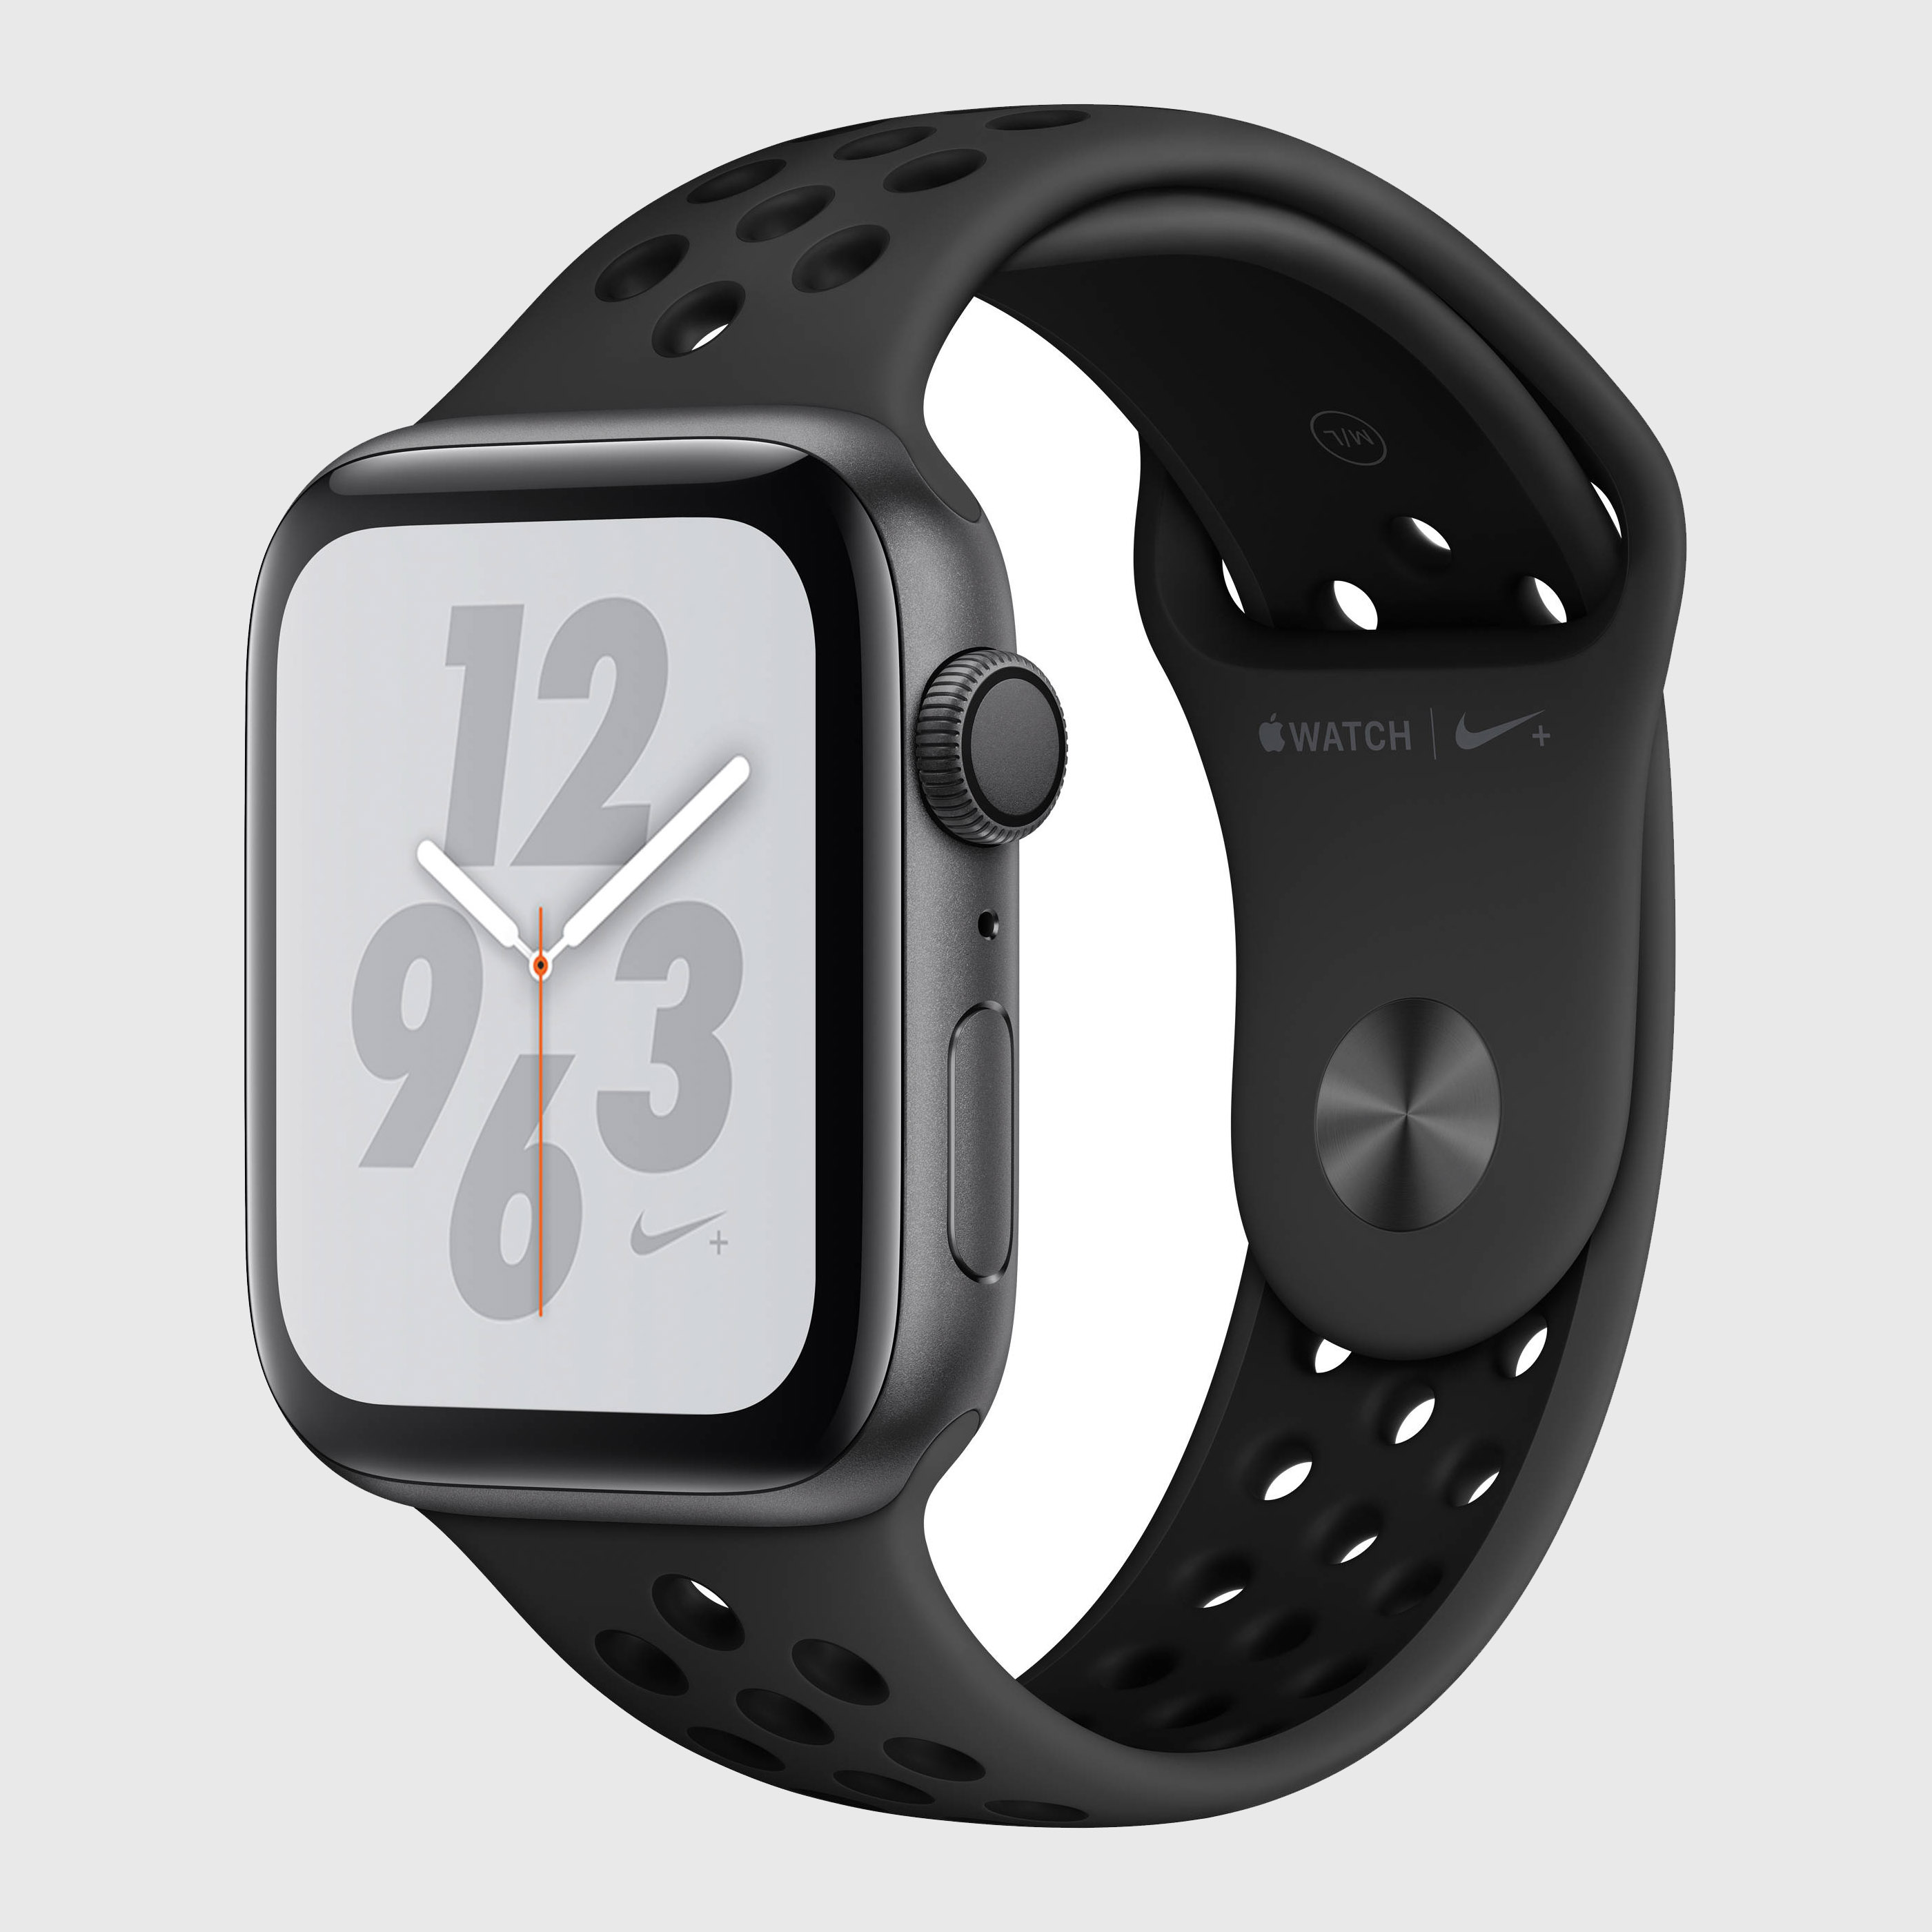 Apple Watch Nike+ Series 4 Performance Upgrade: Experts' Picks